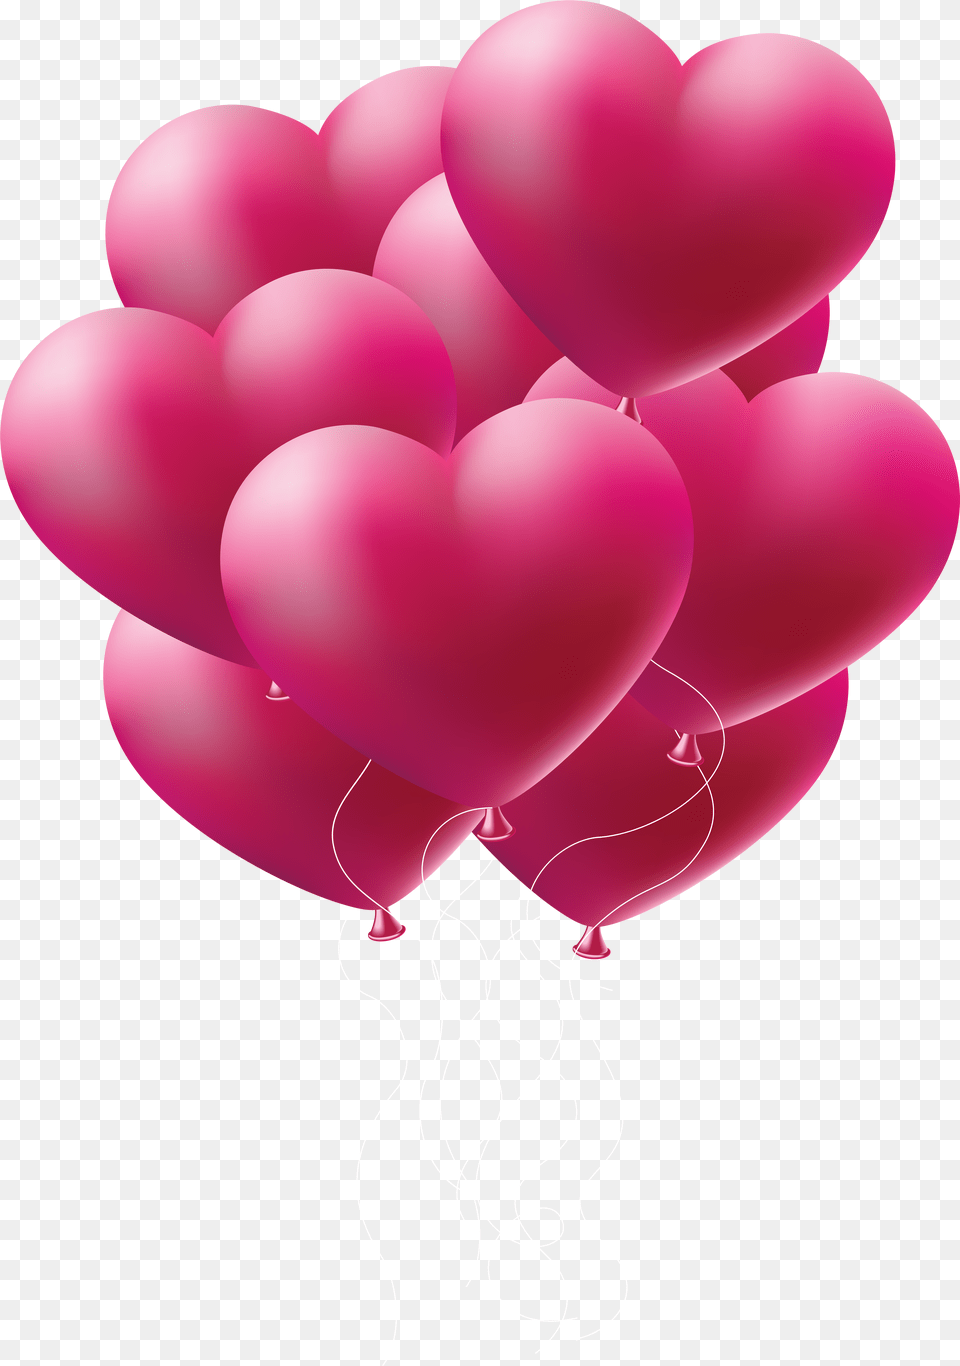 Clip Art Gallery Yopriceville Pink Heart Balloon Png